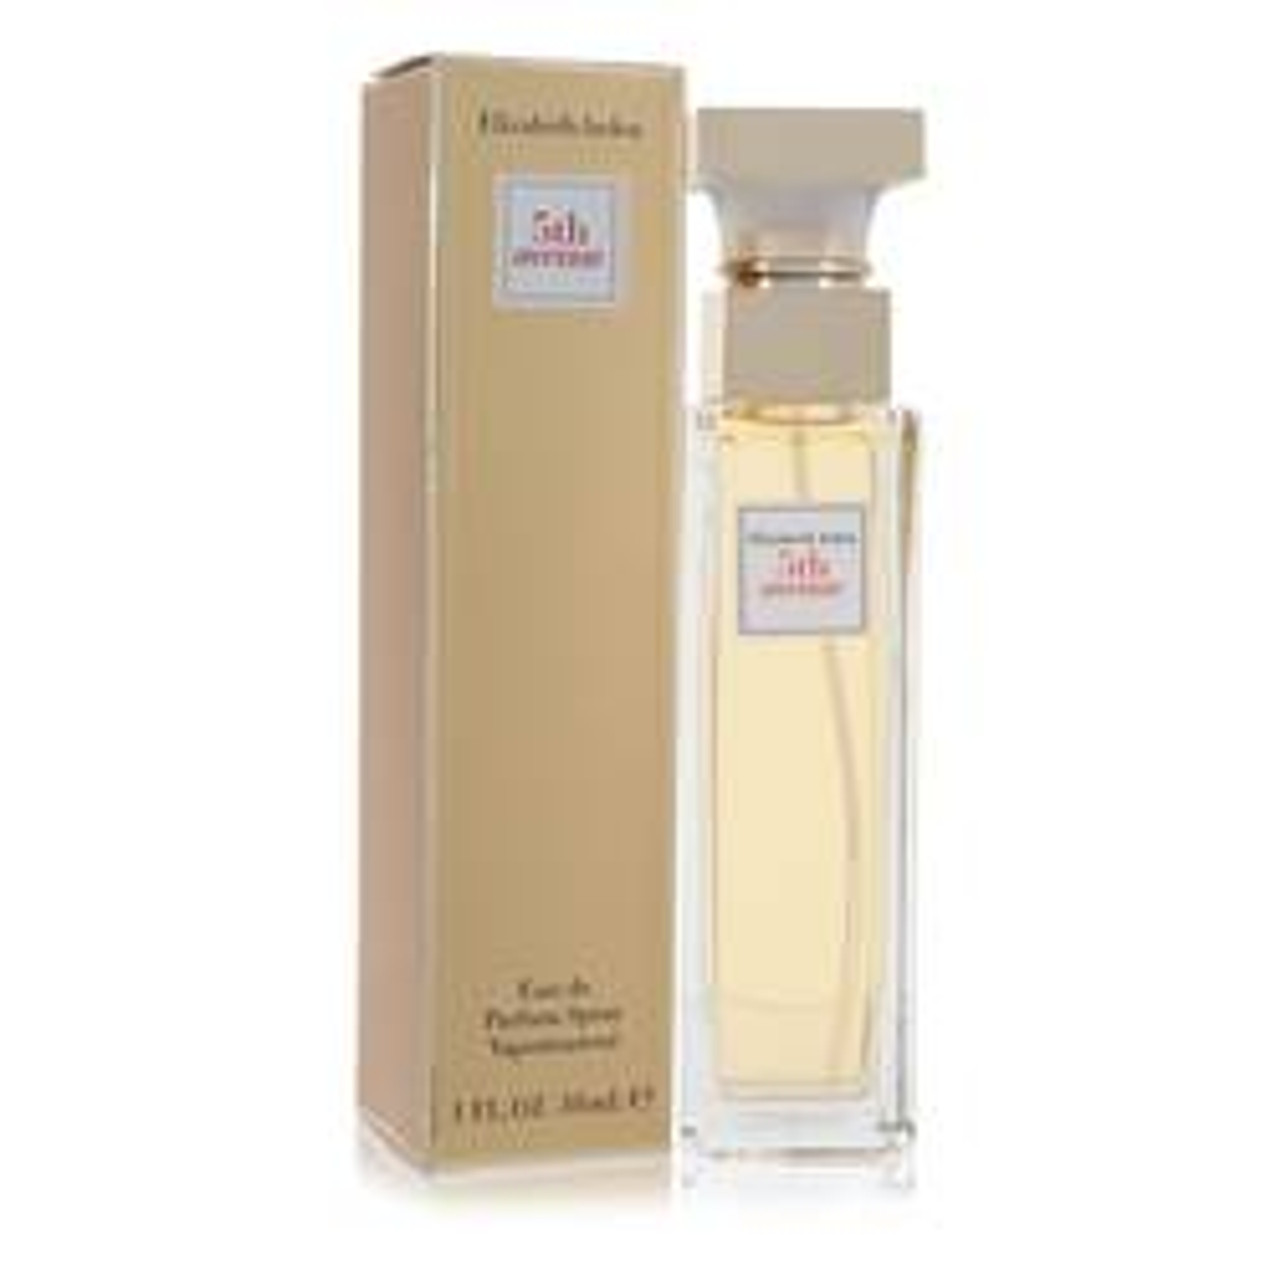 5th Avenue Perfume By Elizabeth Arden Eau De Parfum Spray 1 oz for Women - [From 43.00 - Choose pk Qty ] - *Ships from Miami